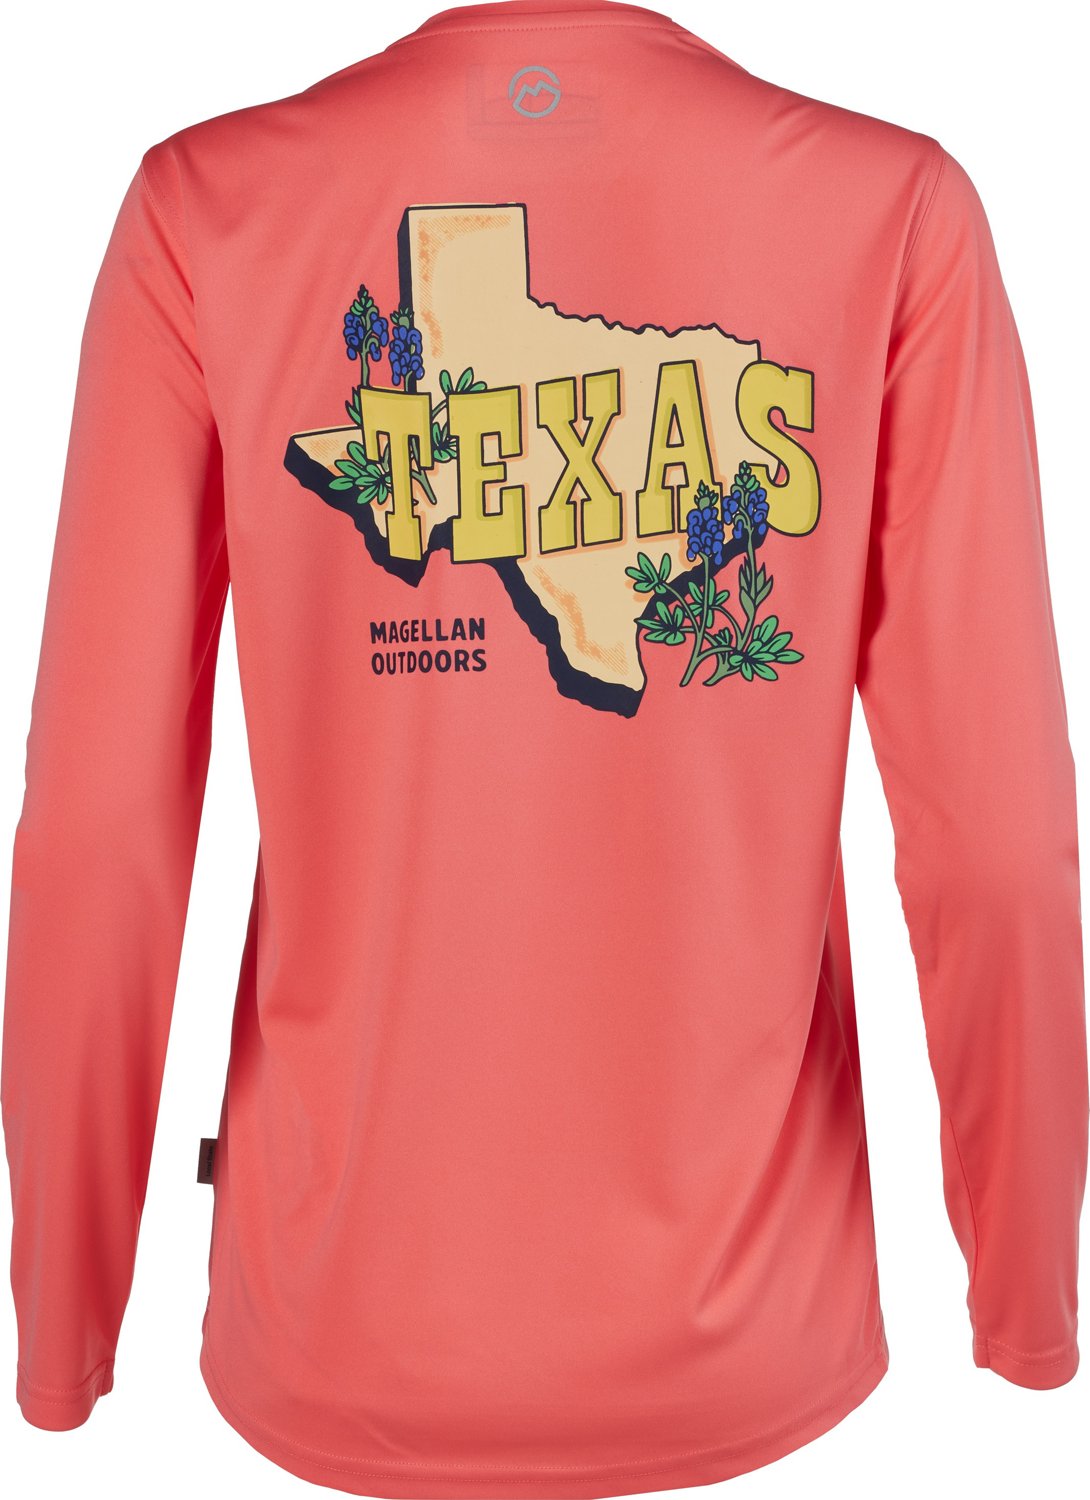 Magellan Outdoors Women's Local State Texas Long Sleeve Fishing Shirt